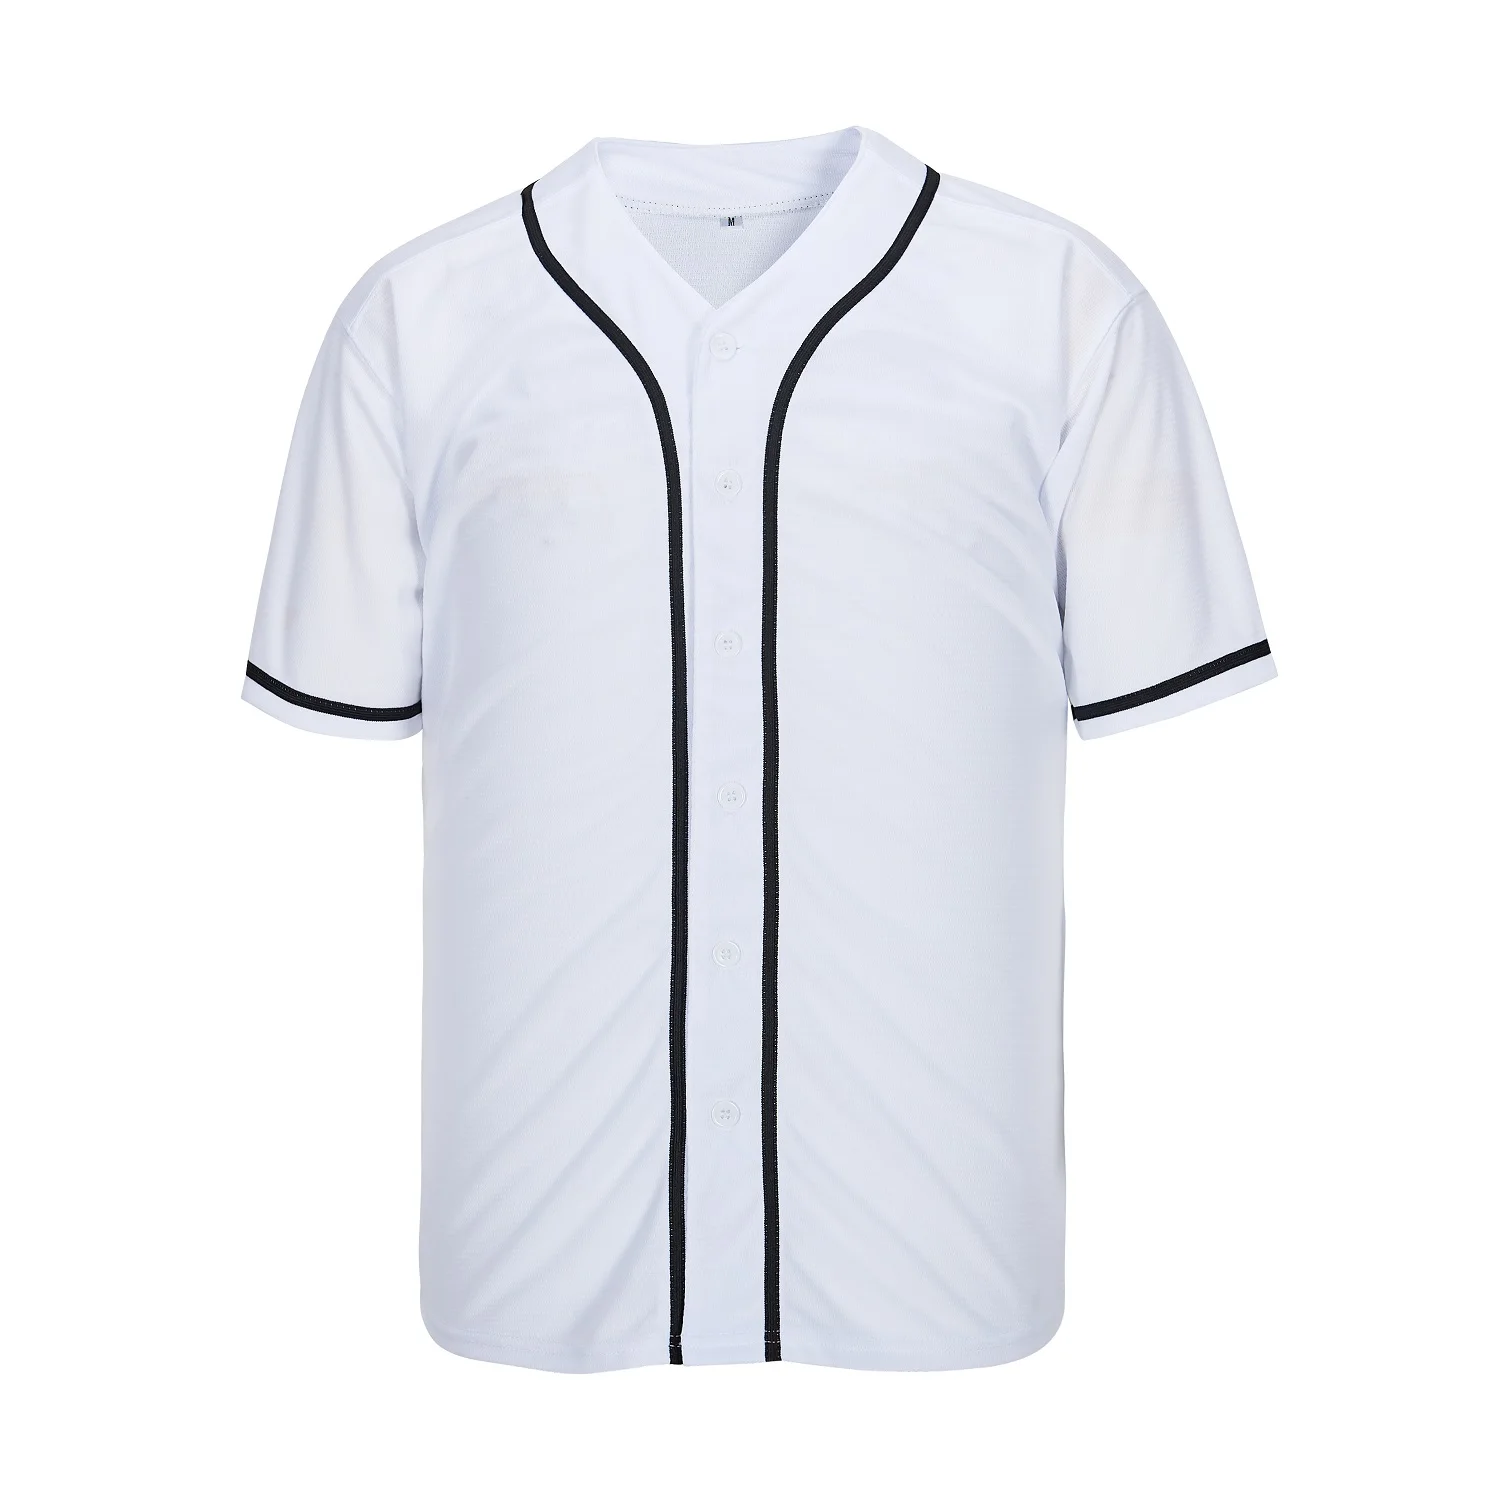 BG baseball jersey White jerseys Outdoor sportswear Embroidery sewing  Hip-hop Street culture sweat suit Accept custom - AliExpress